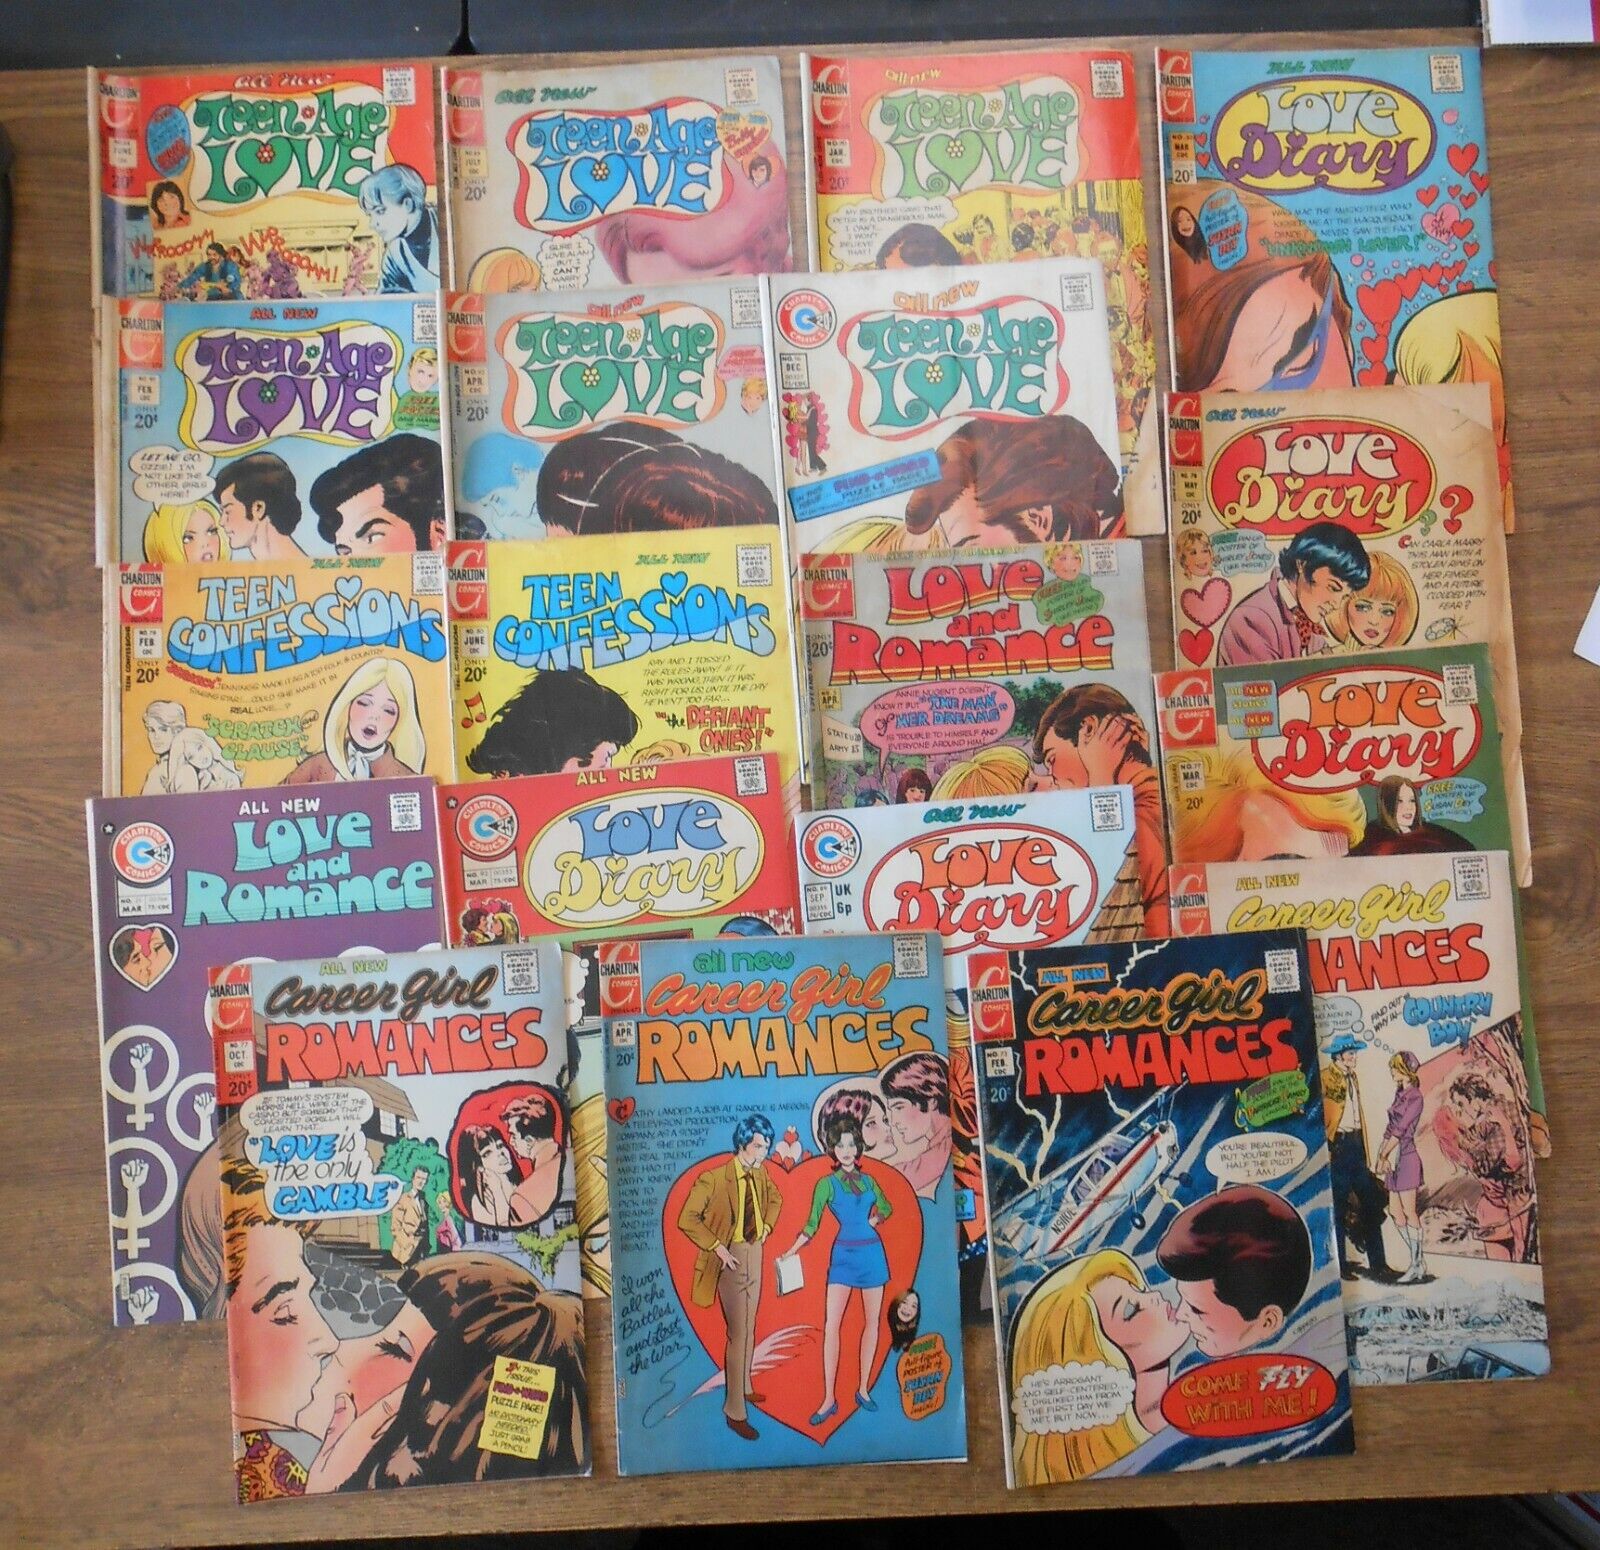 19 Charlton Comics 1970s Career Girl Teen Age Love Love Diary Teen Confessions